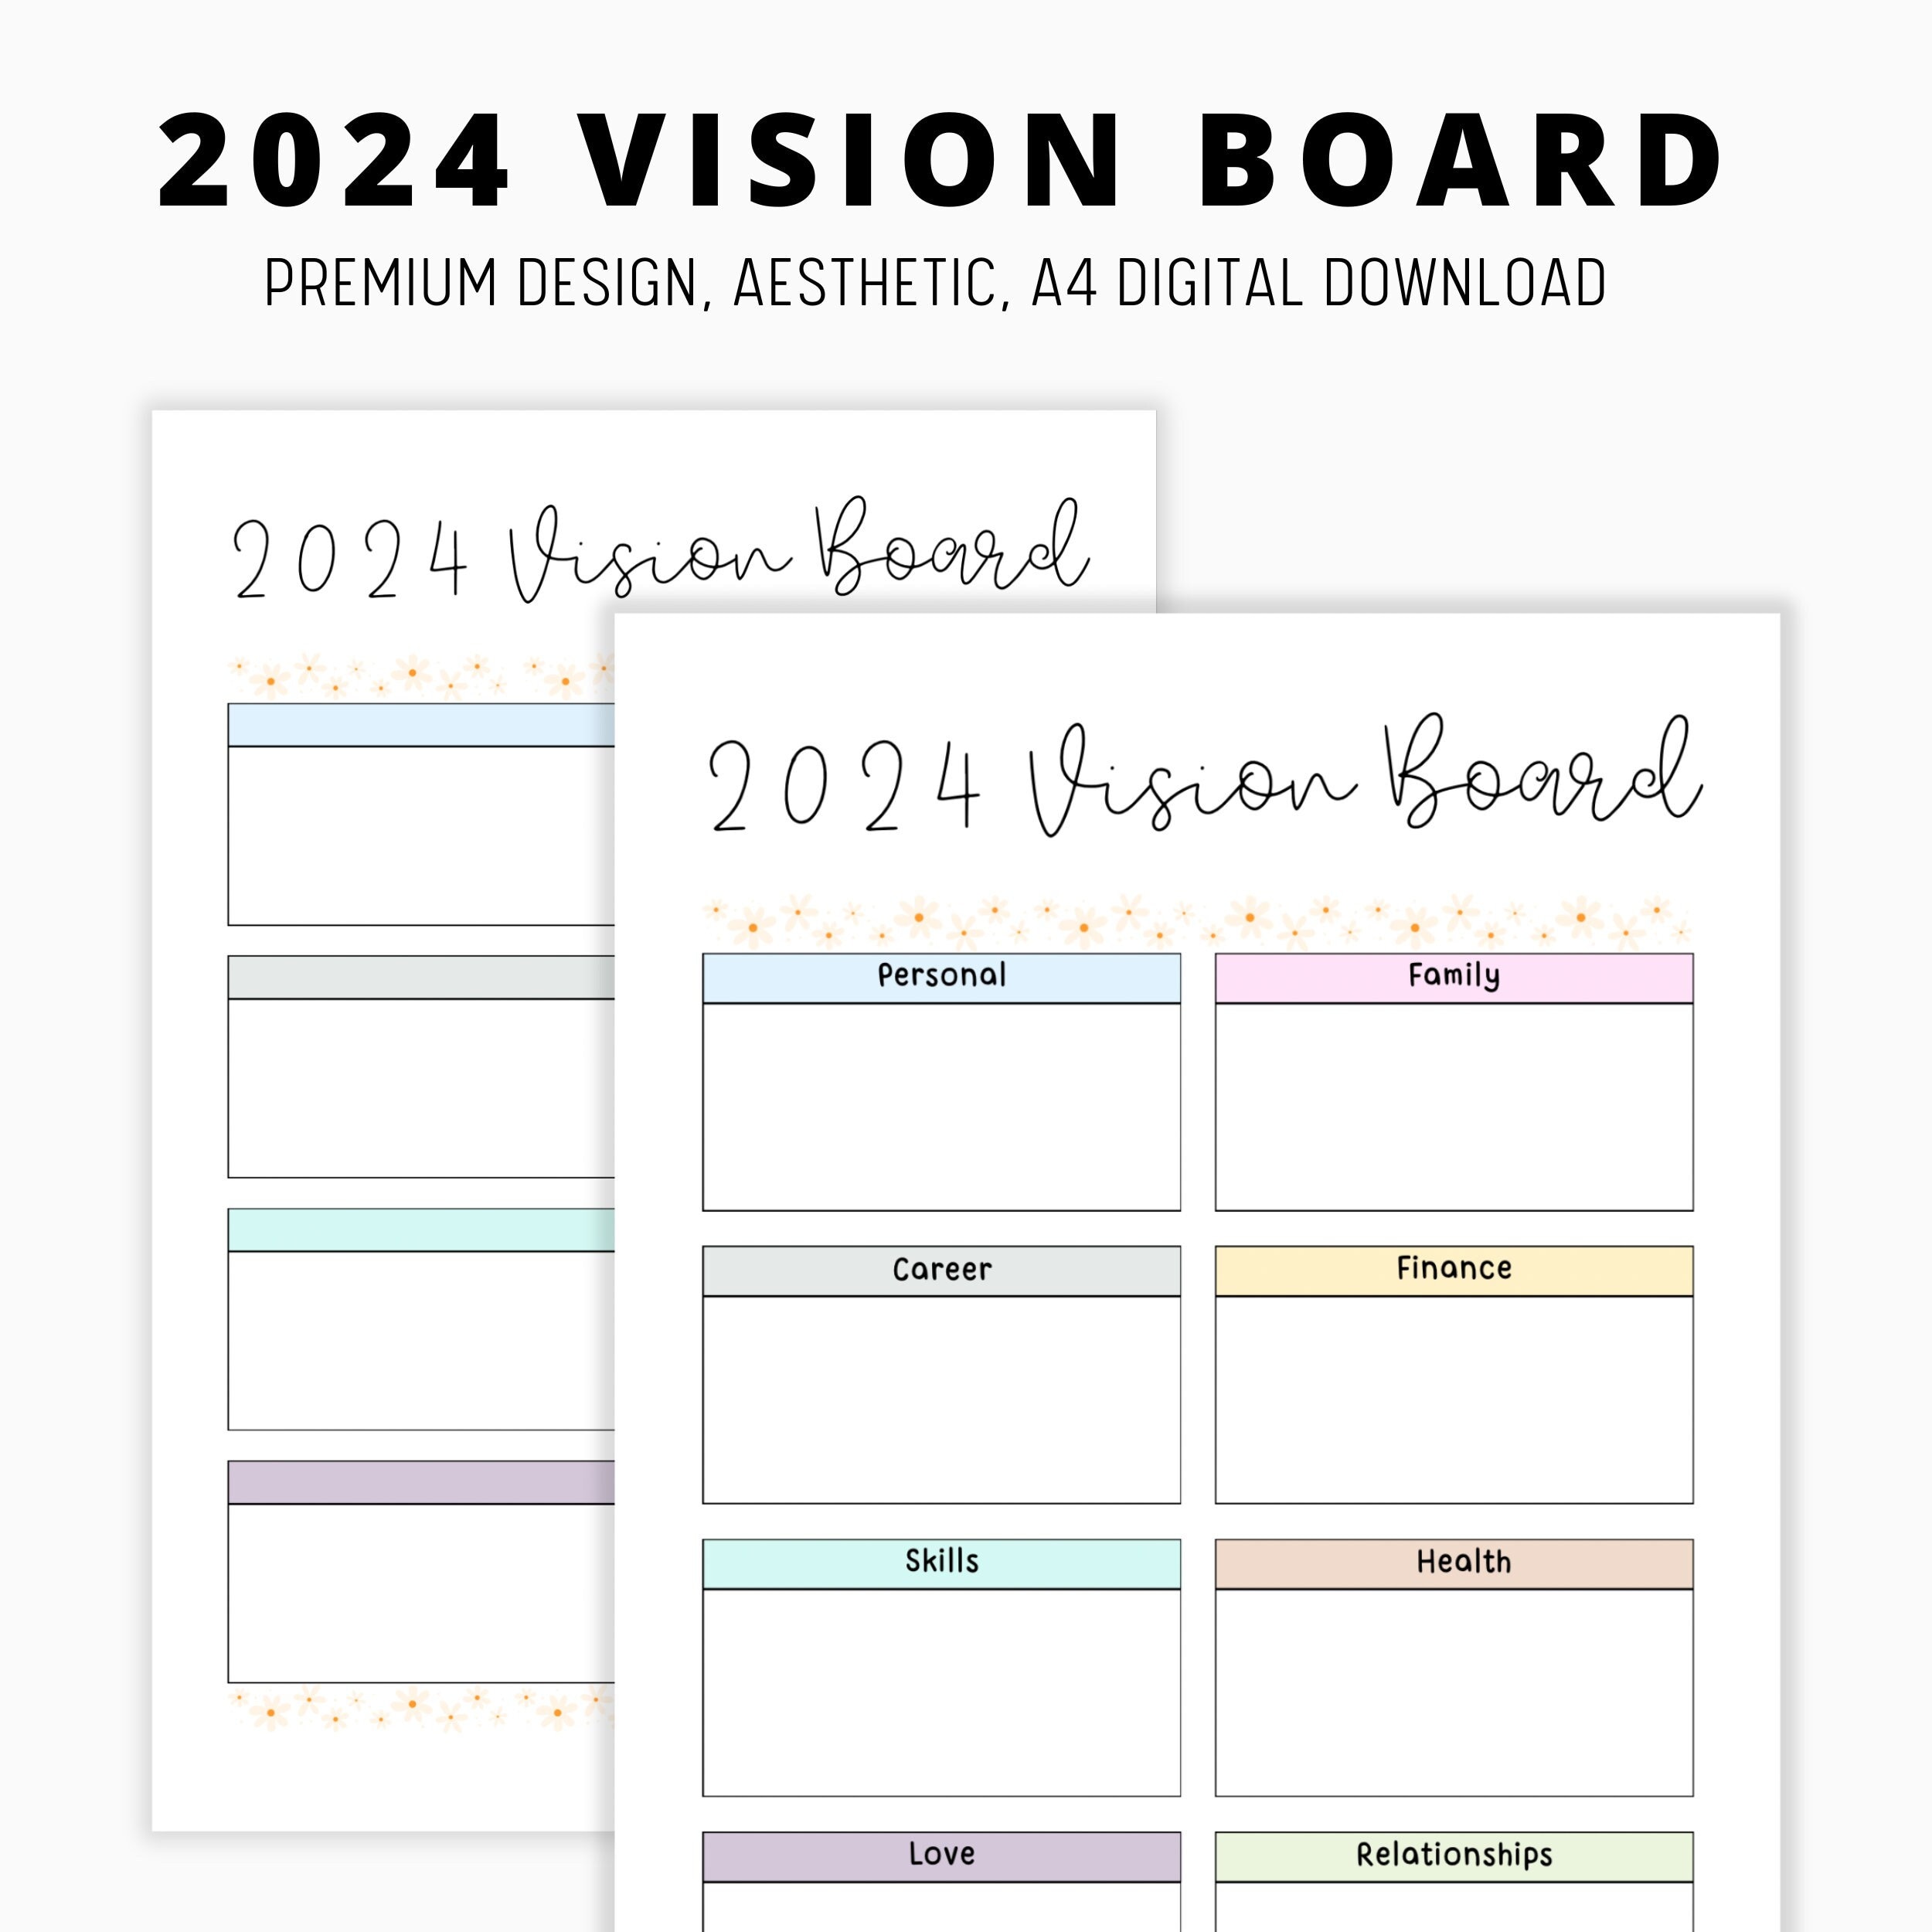 Vision Board Kit [BLACK] – Lovet Planners